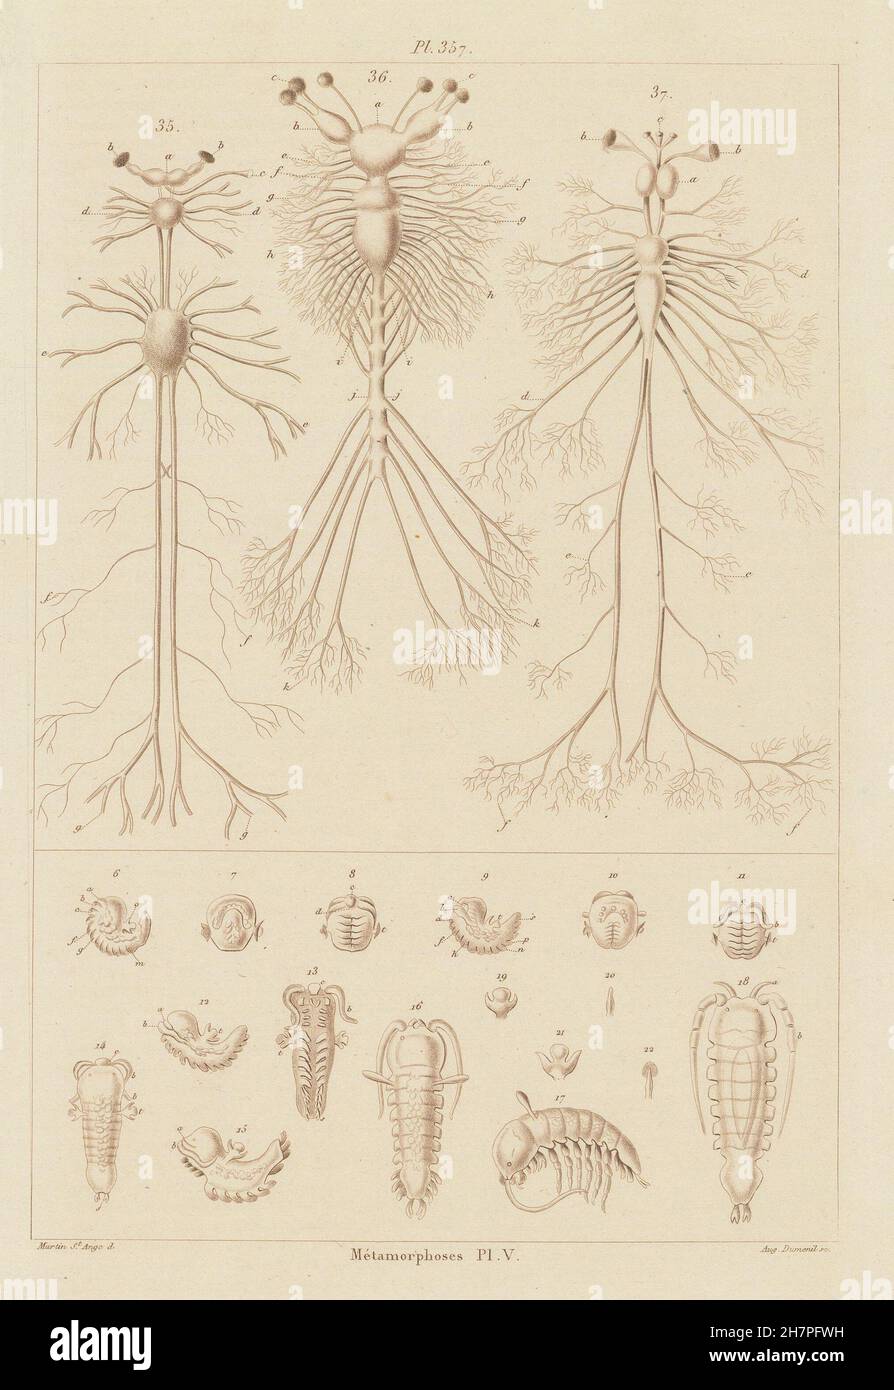 INSECTS: Métamorphoses. Metamorphosis Pl. V, antique print 1833 Stock Photo